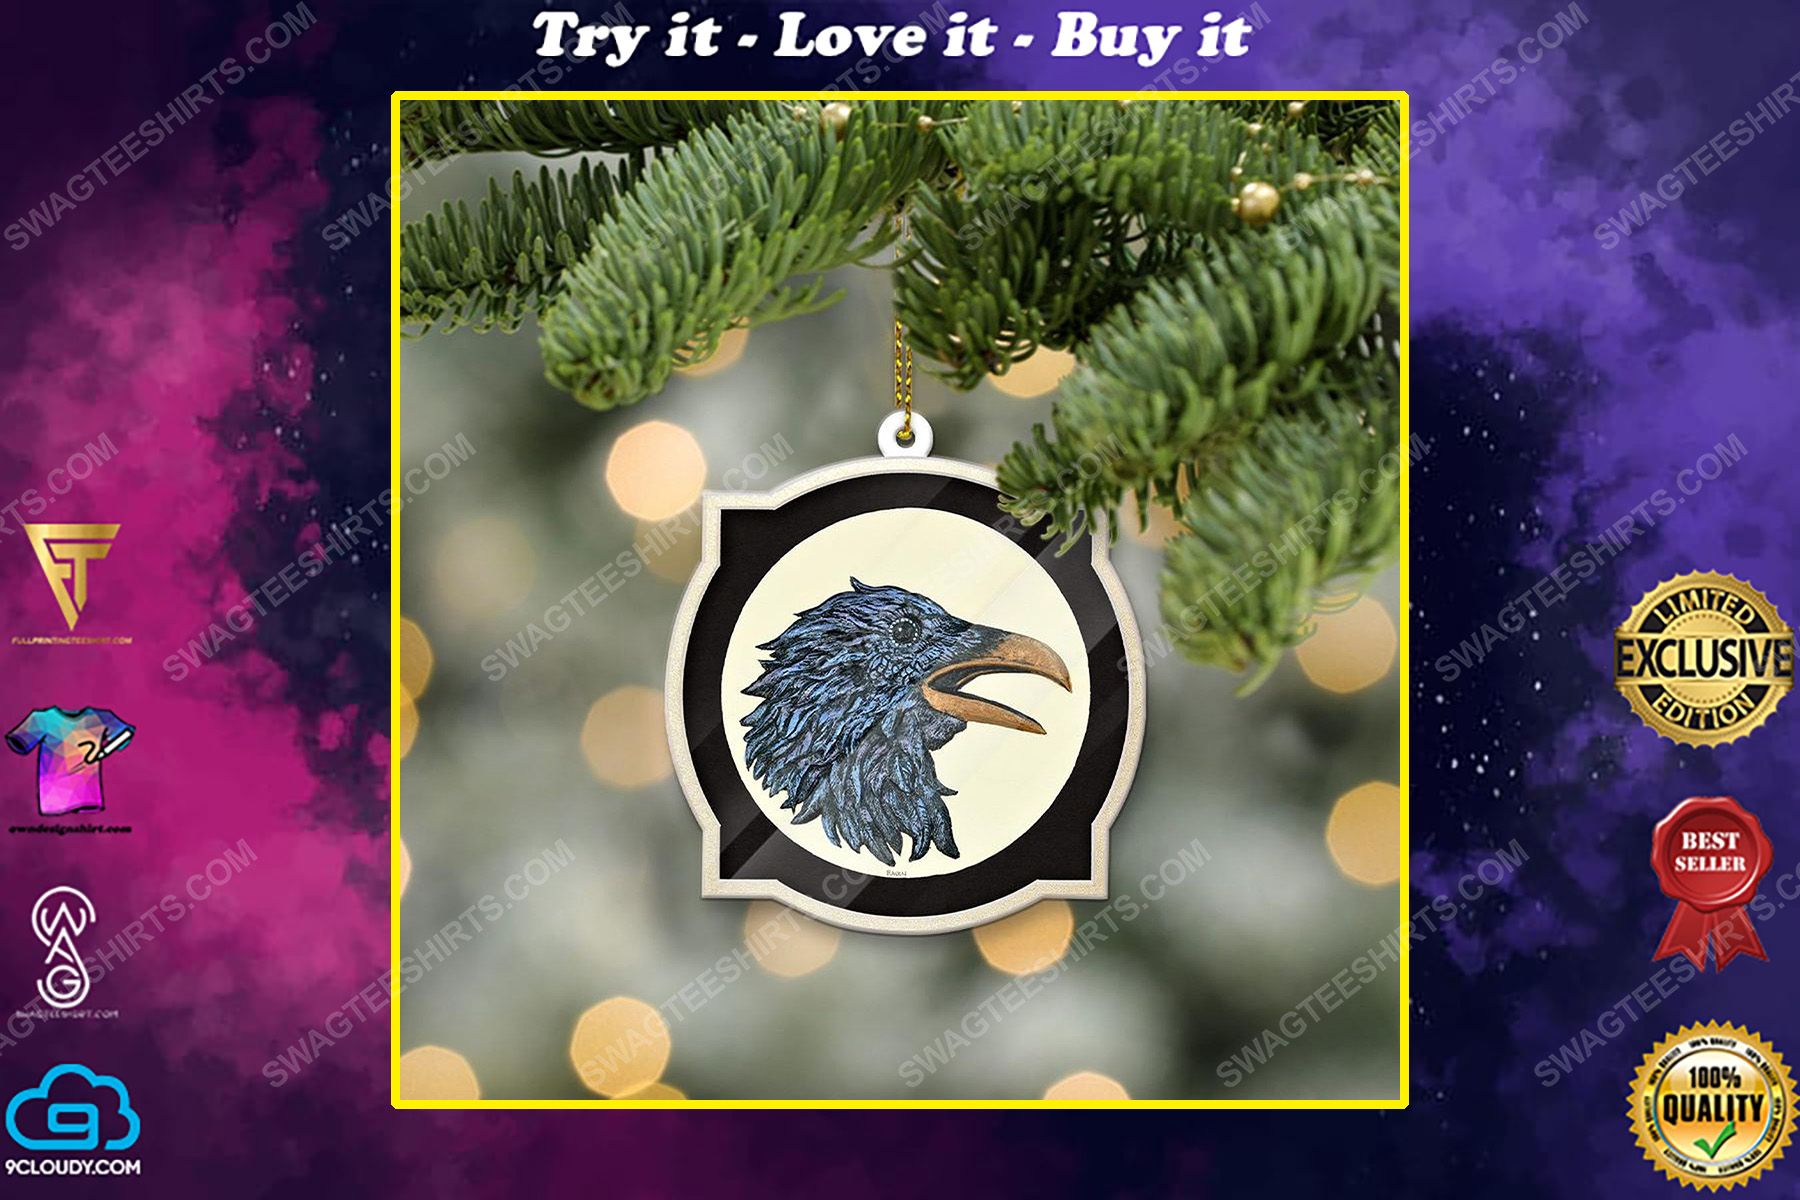 Raven viking christmas gift ornament